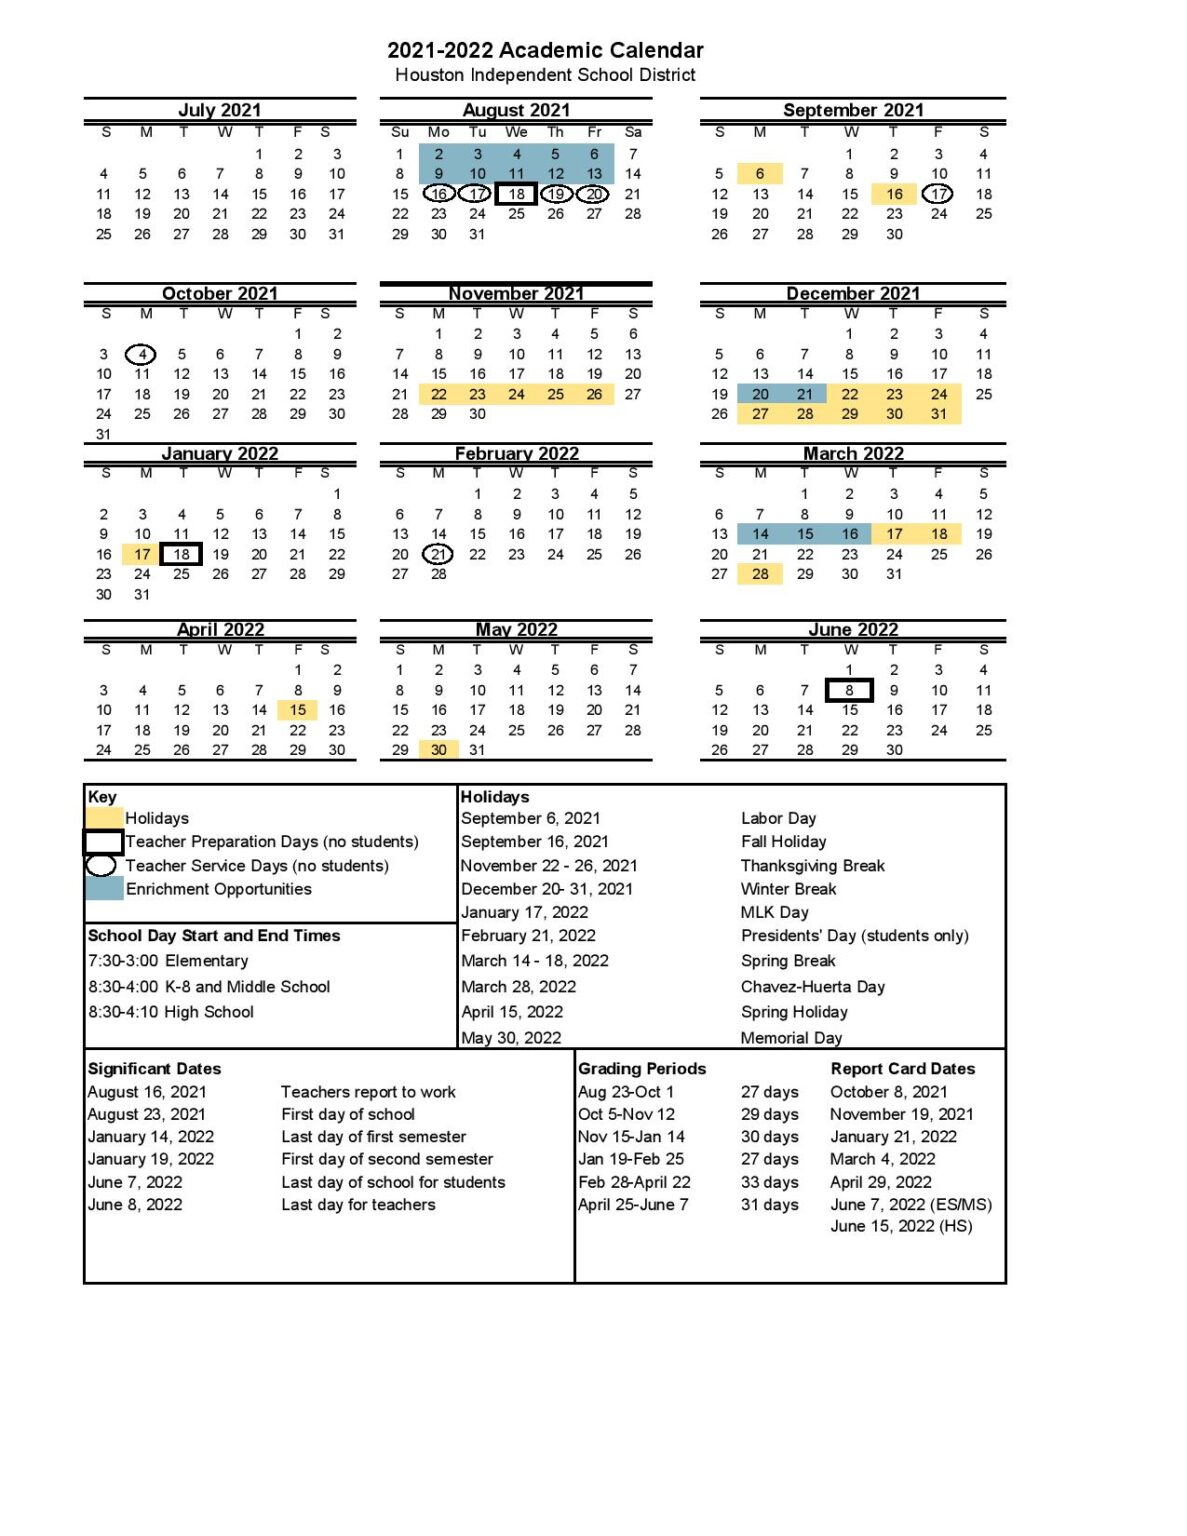 Houston Independent School District Calendar 2021-2022